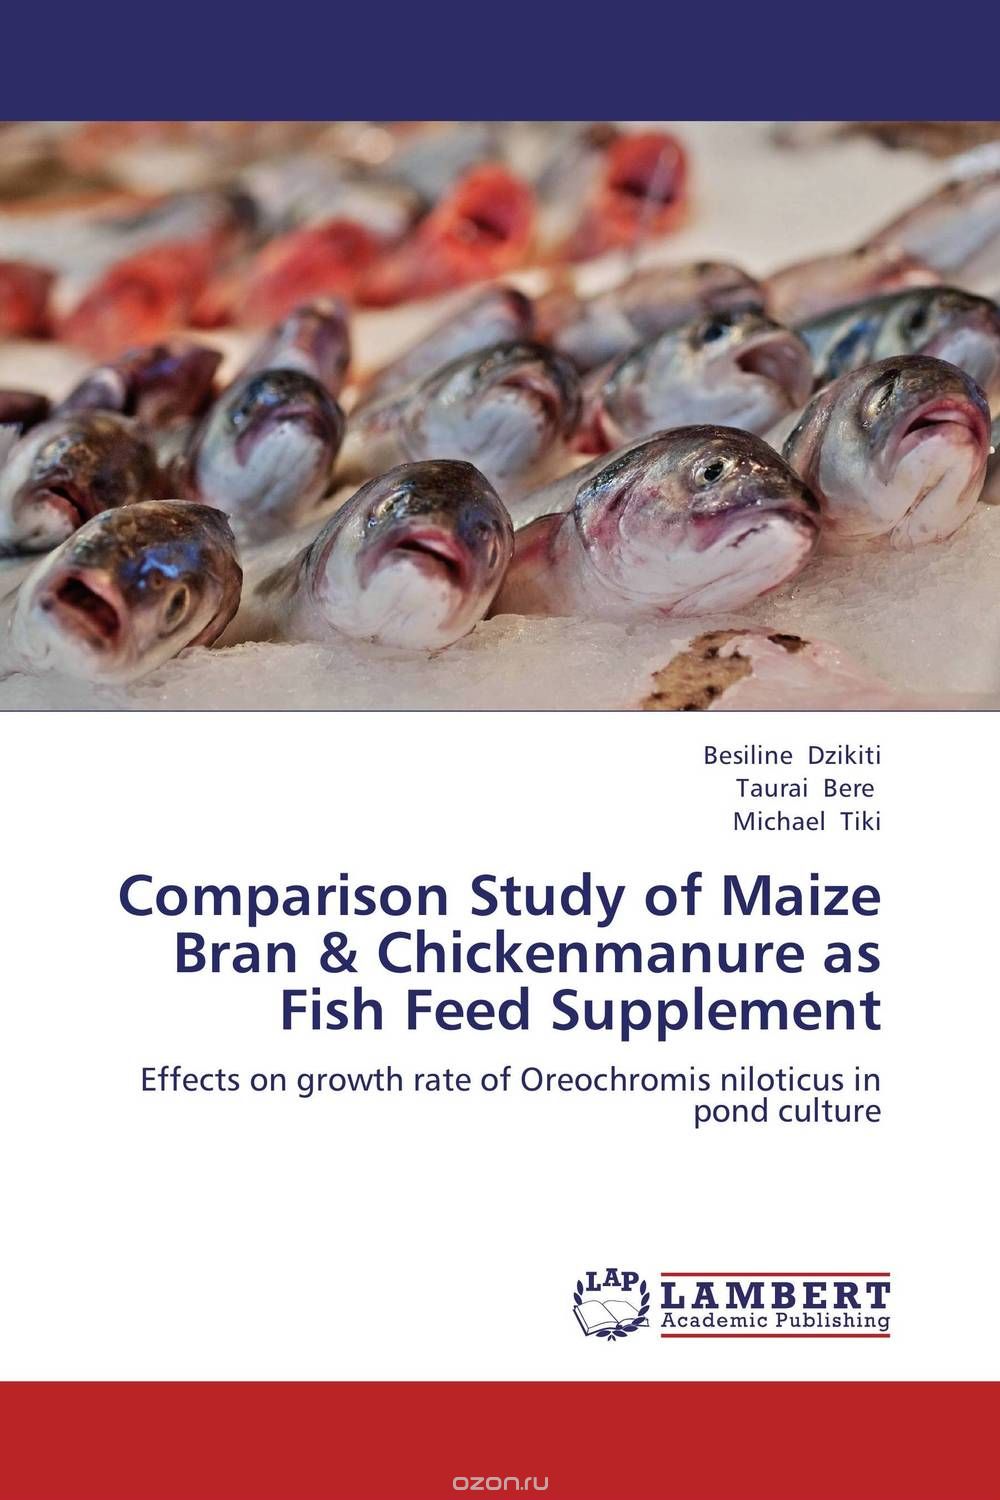 Скачать книгу "Comparison Study of Maize Bran & Chickenmanure as Fish Feed Supplement"